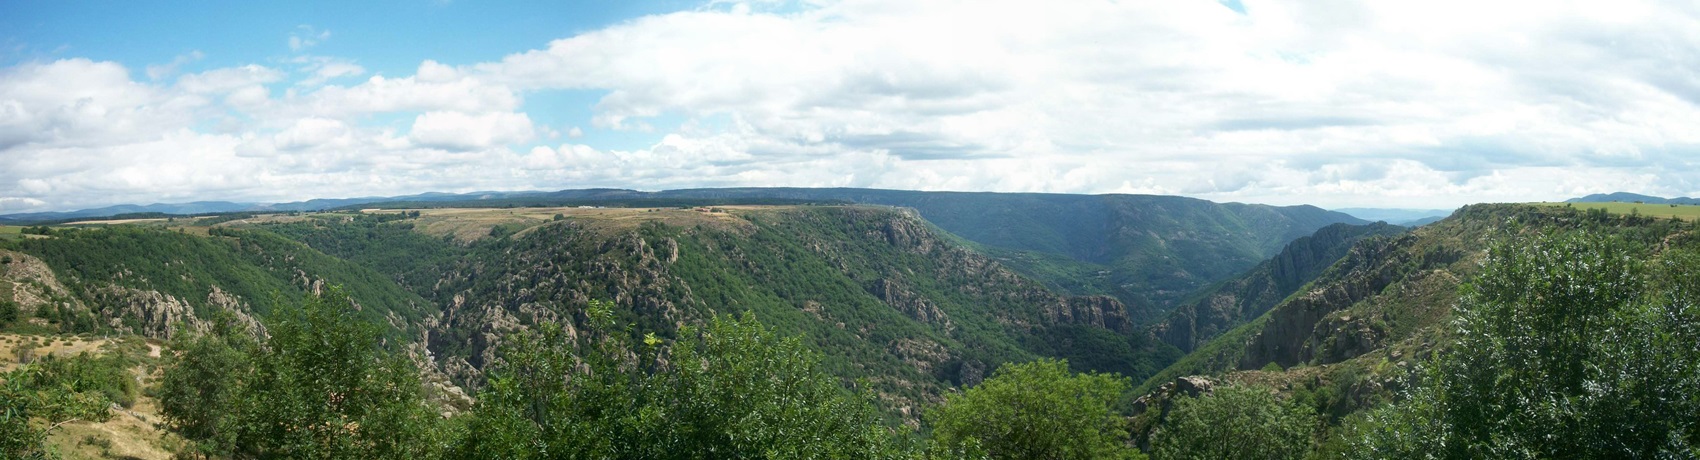 Le canyon du Chassezac en Lozère